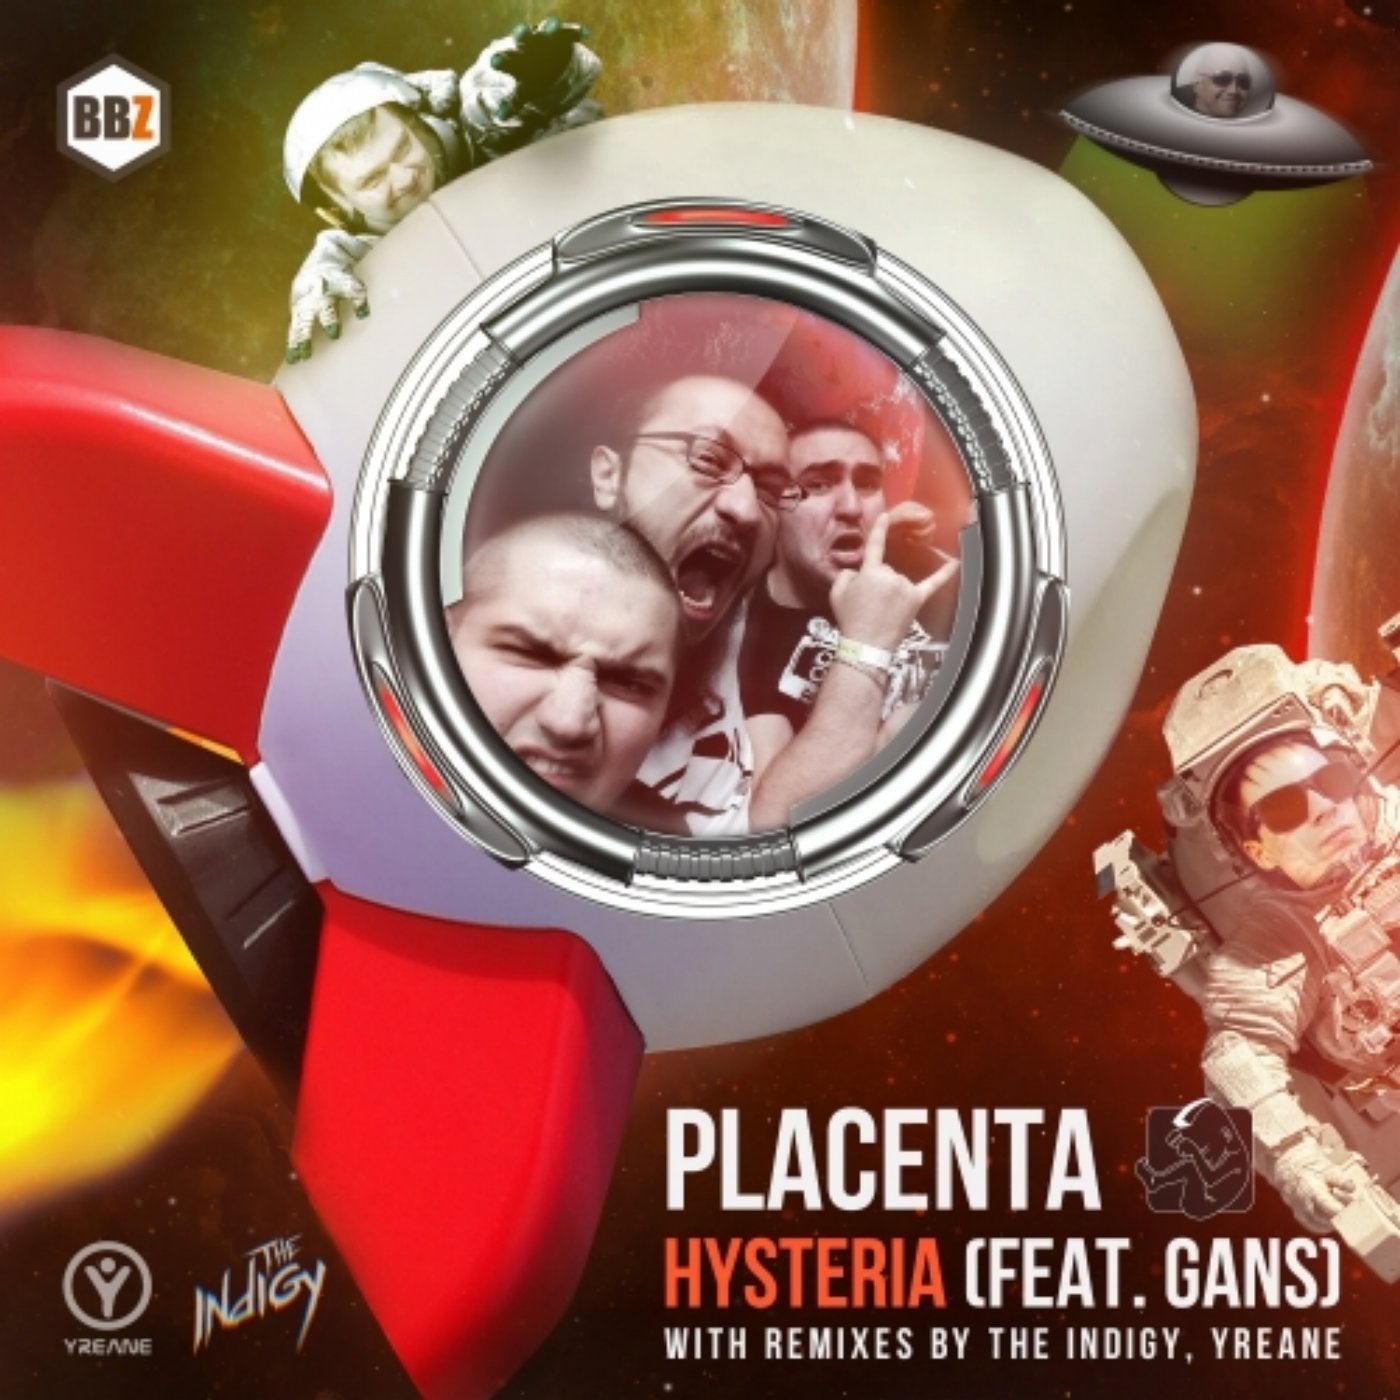 Hysteria (feat. Gans)